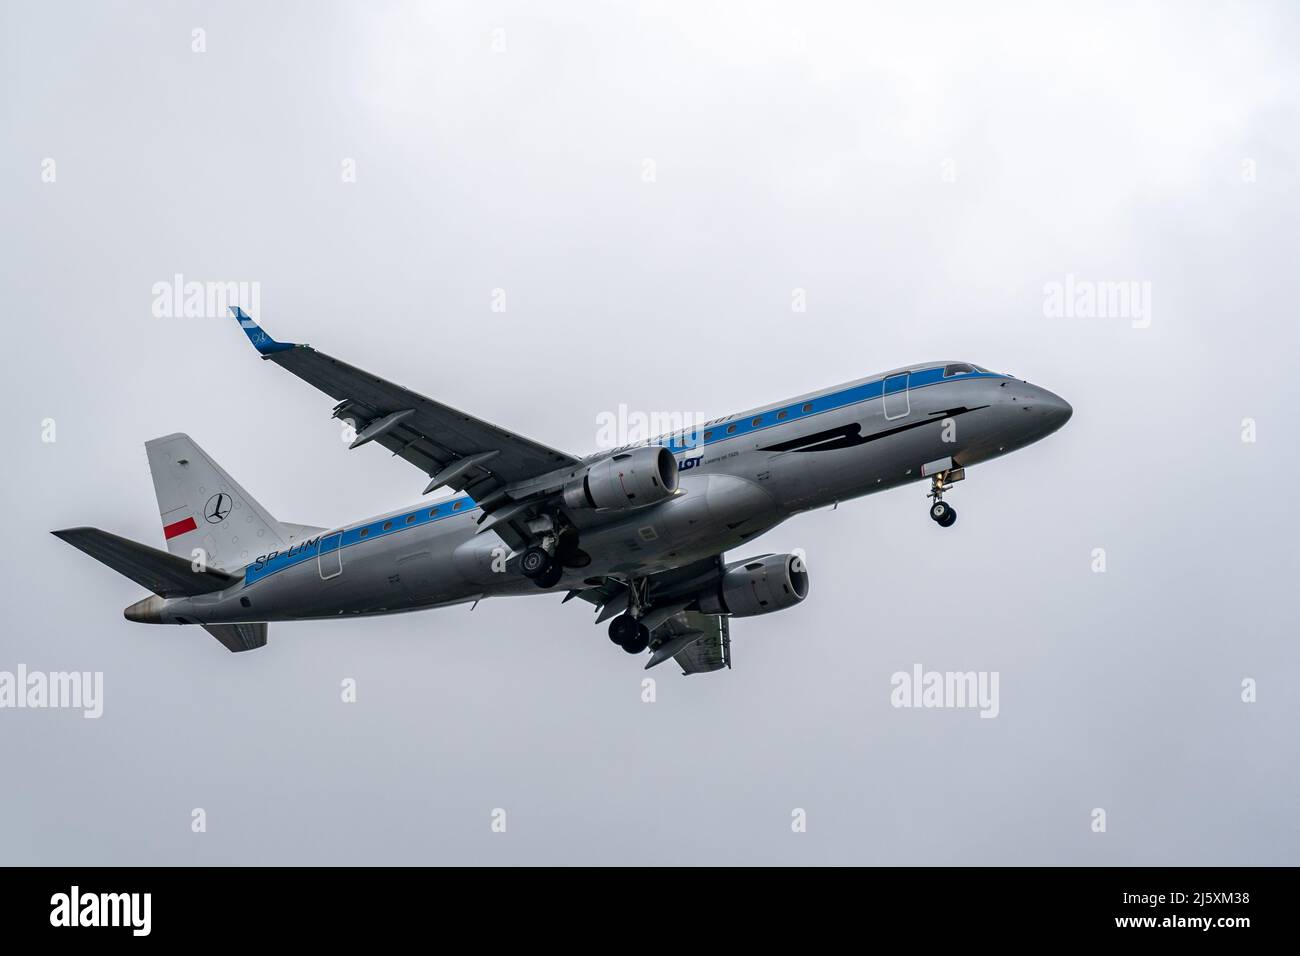 E175 landing at Warsaw Chopin Airport Stock Photo